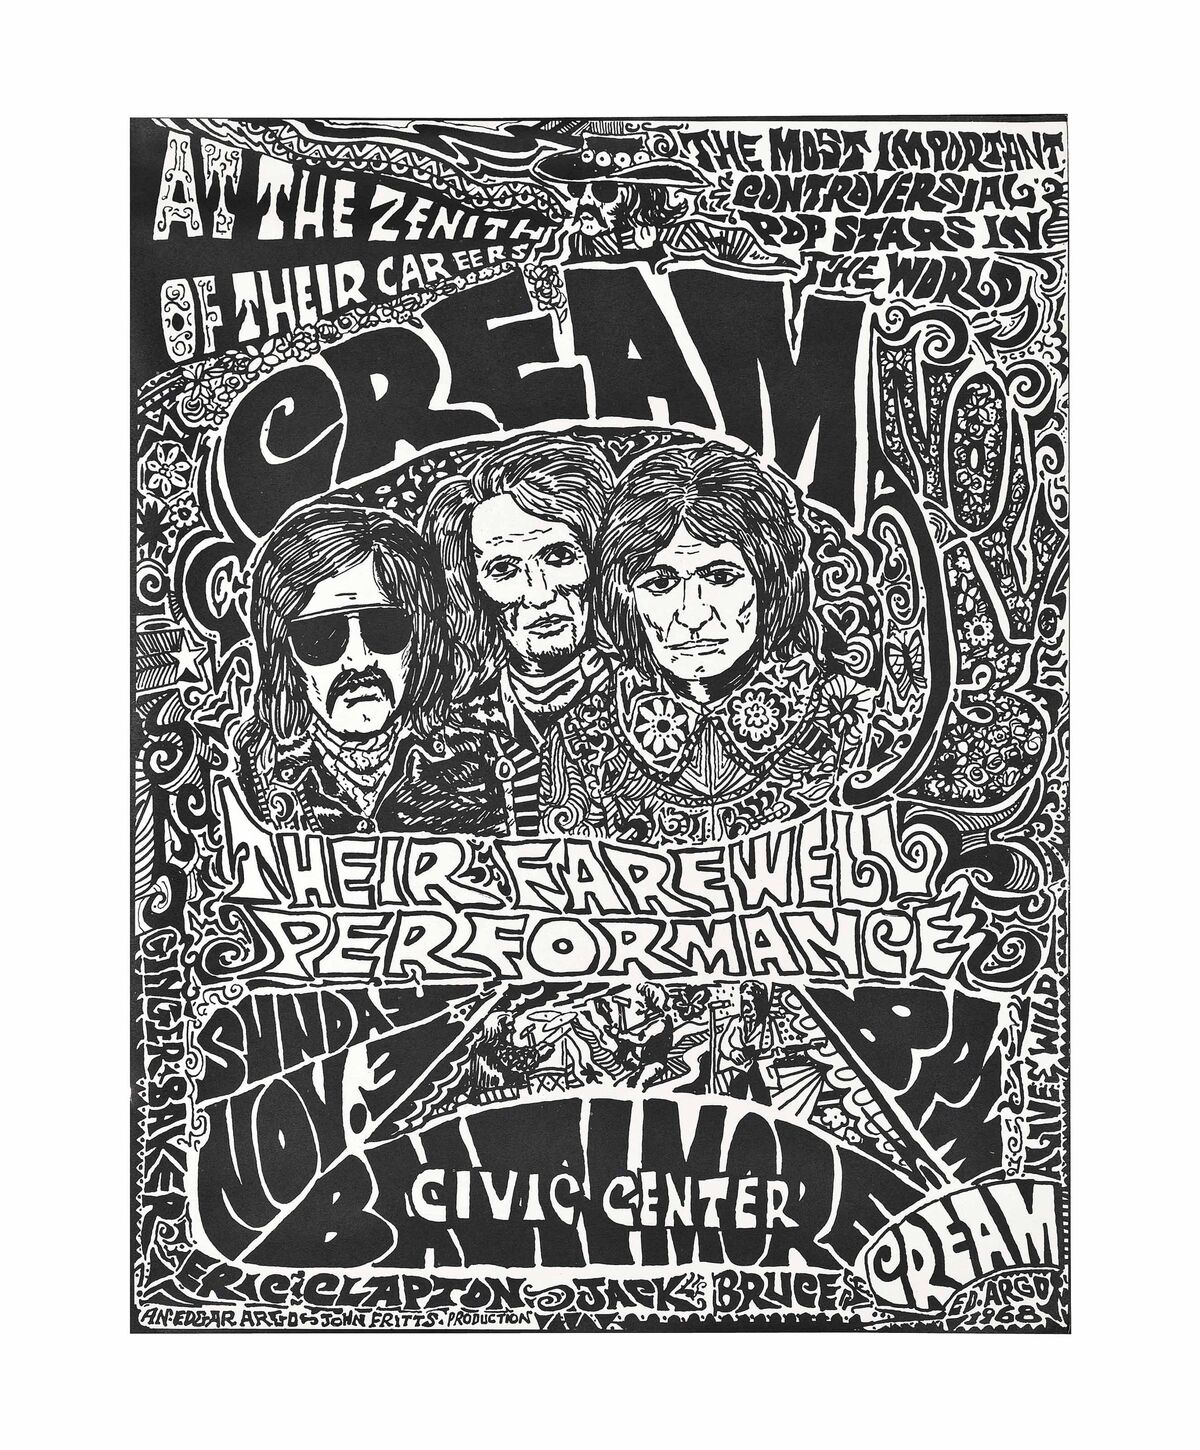 November 3, 1968 Civic Center, Baltimore, MD Concerts Wiki Fandom